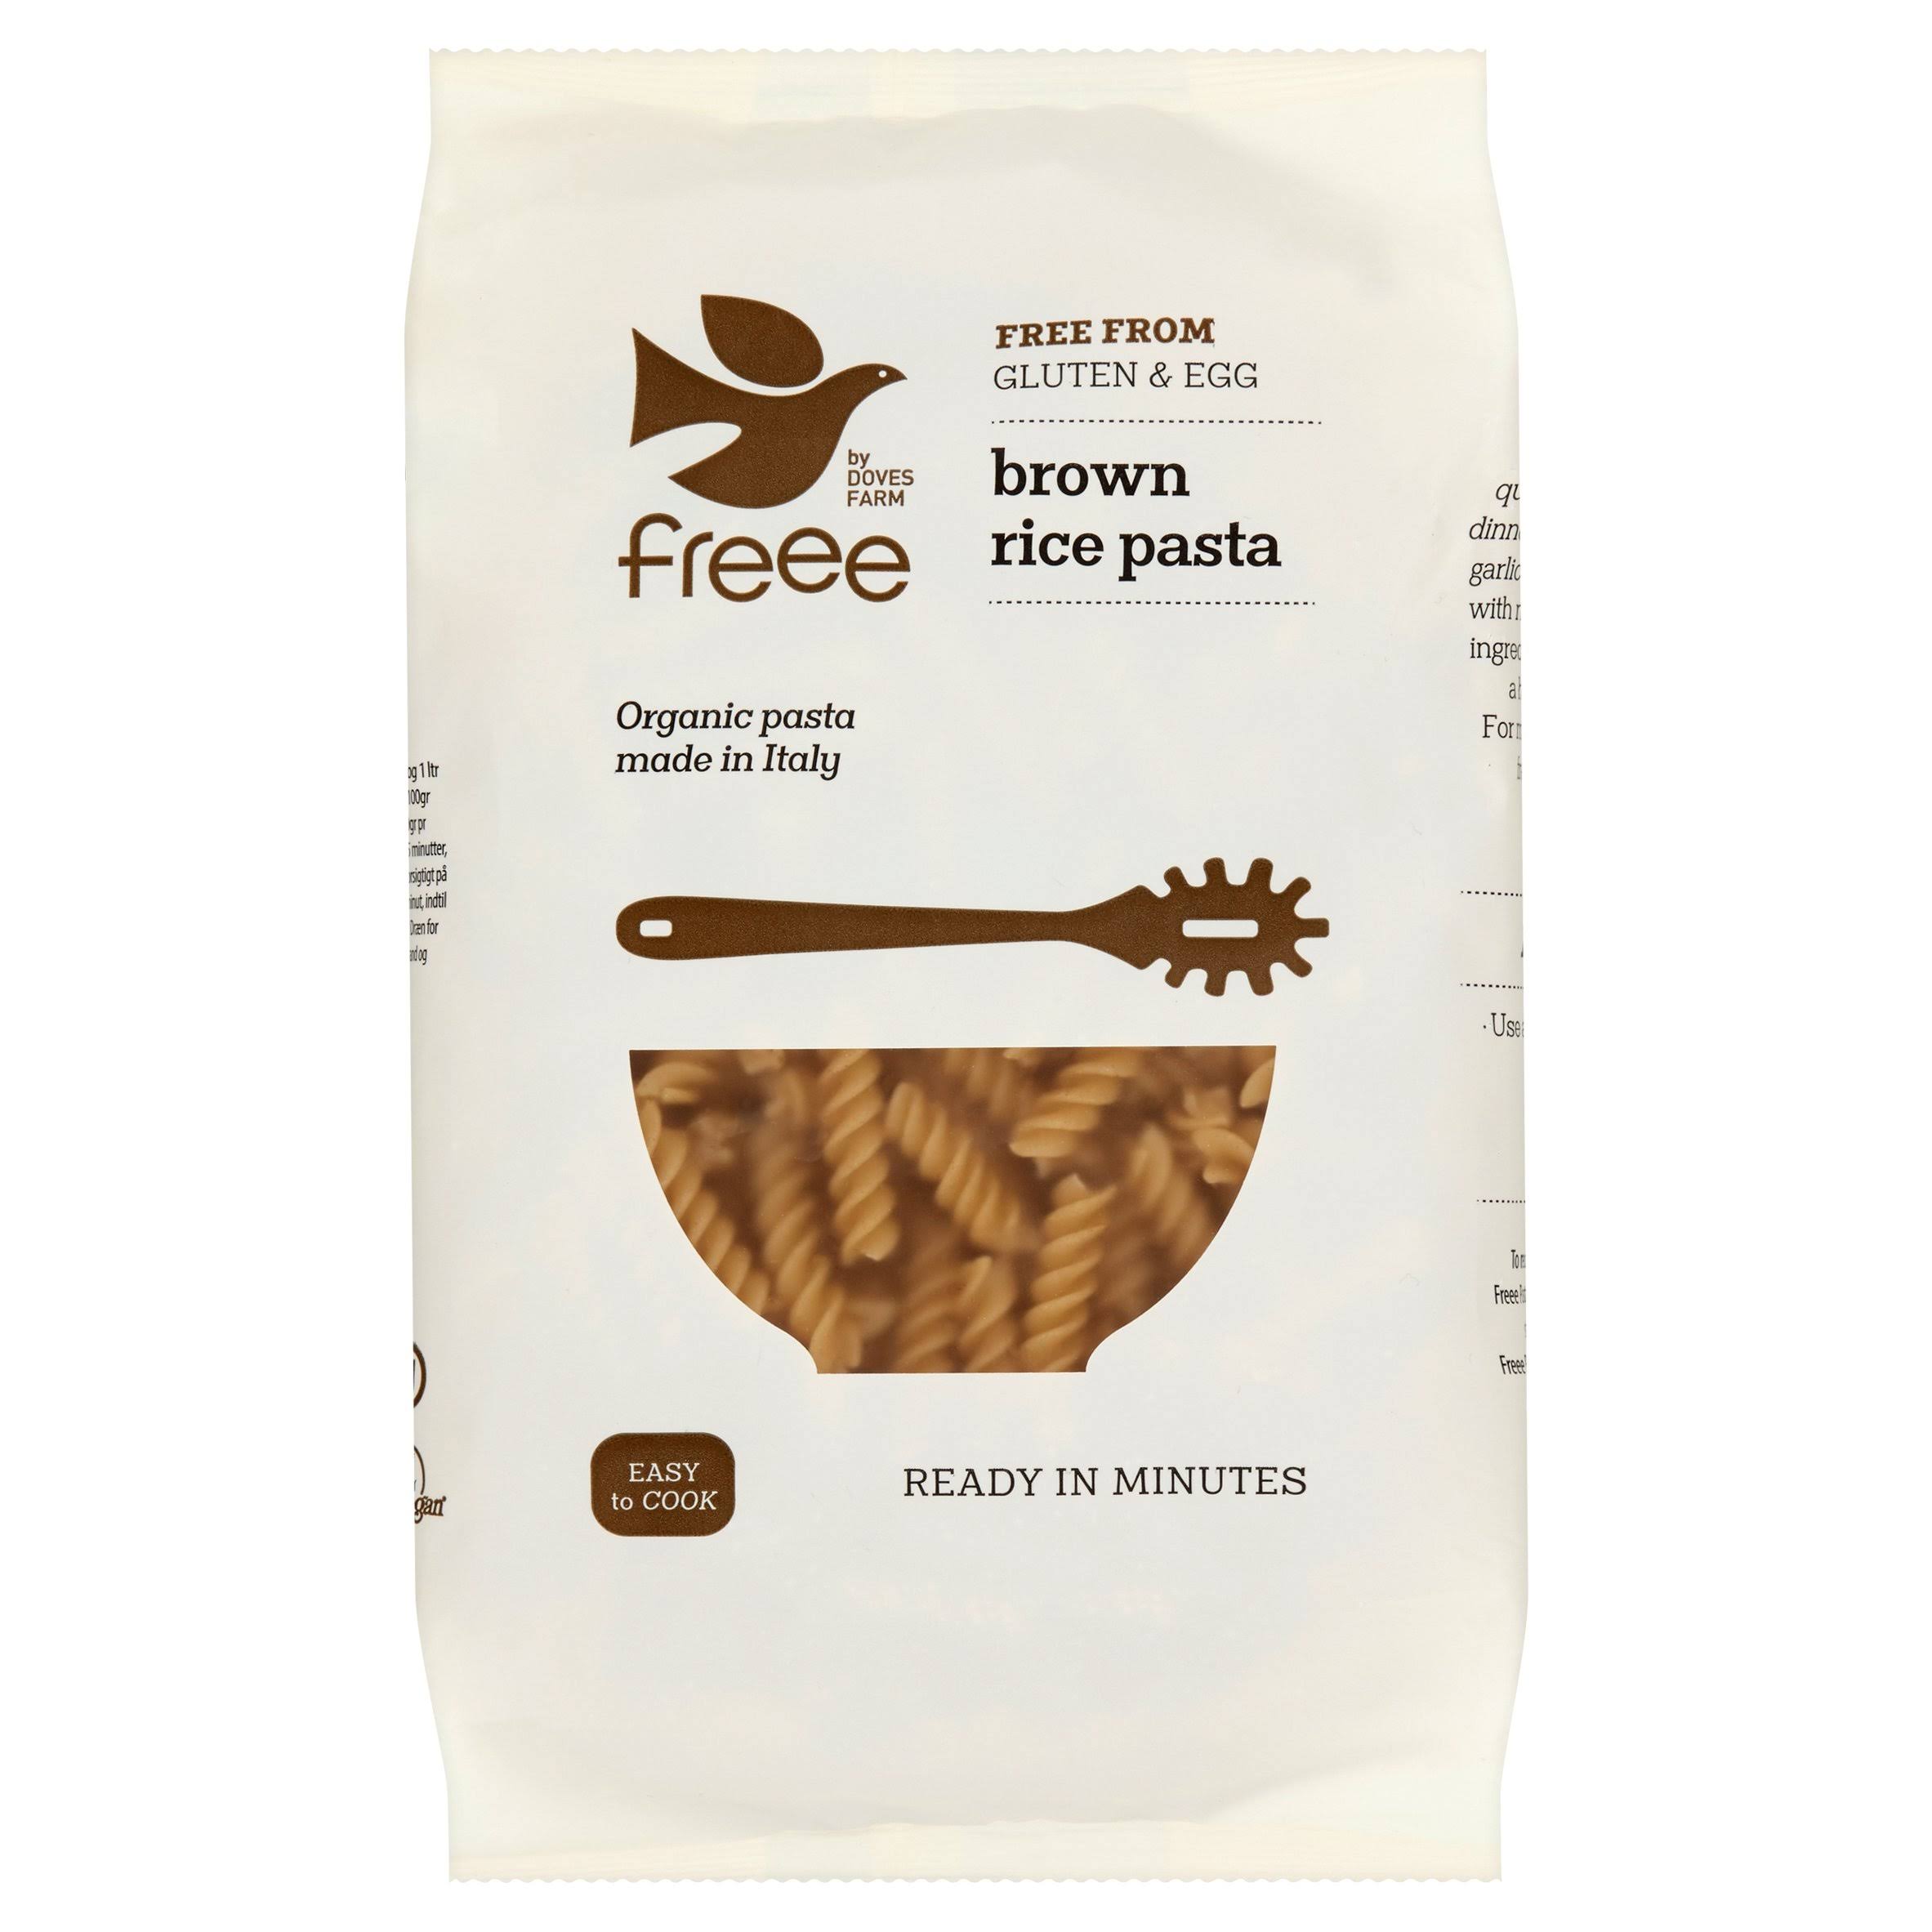 Doves Farm Organic Brown Rice Pasta - 500g, Gluten Free